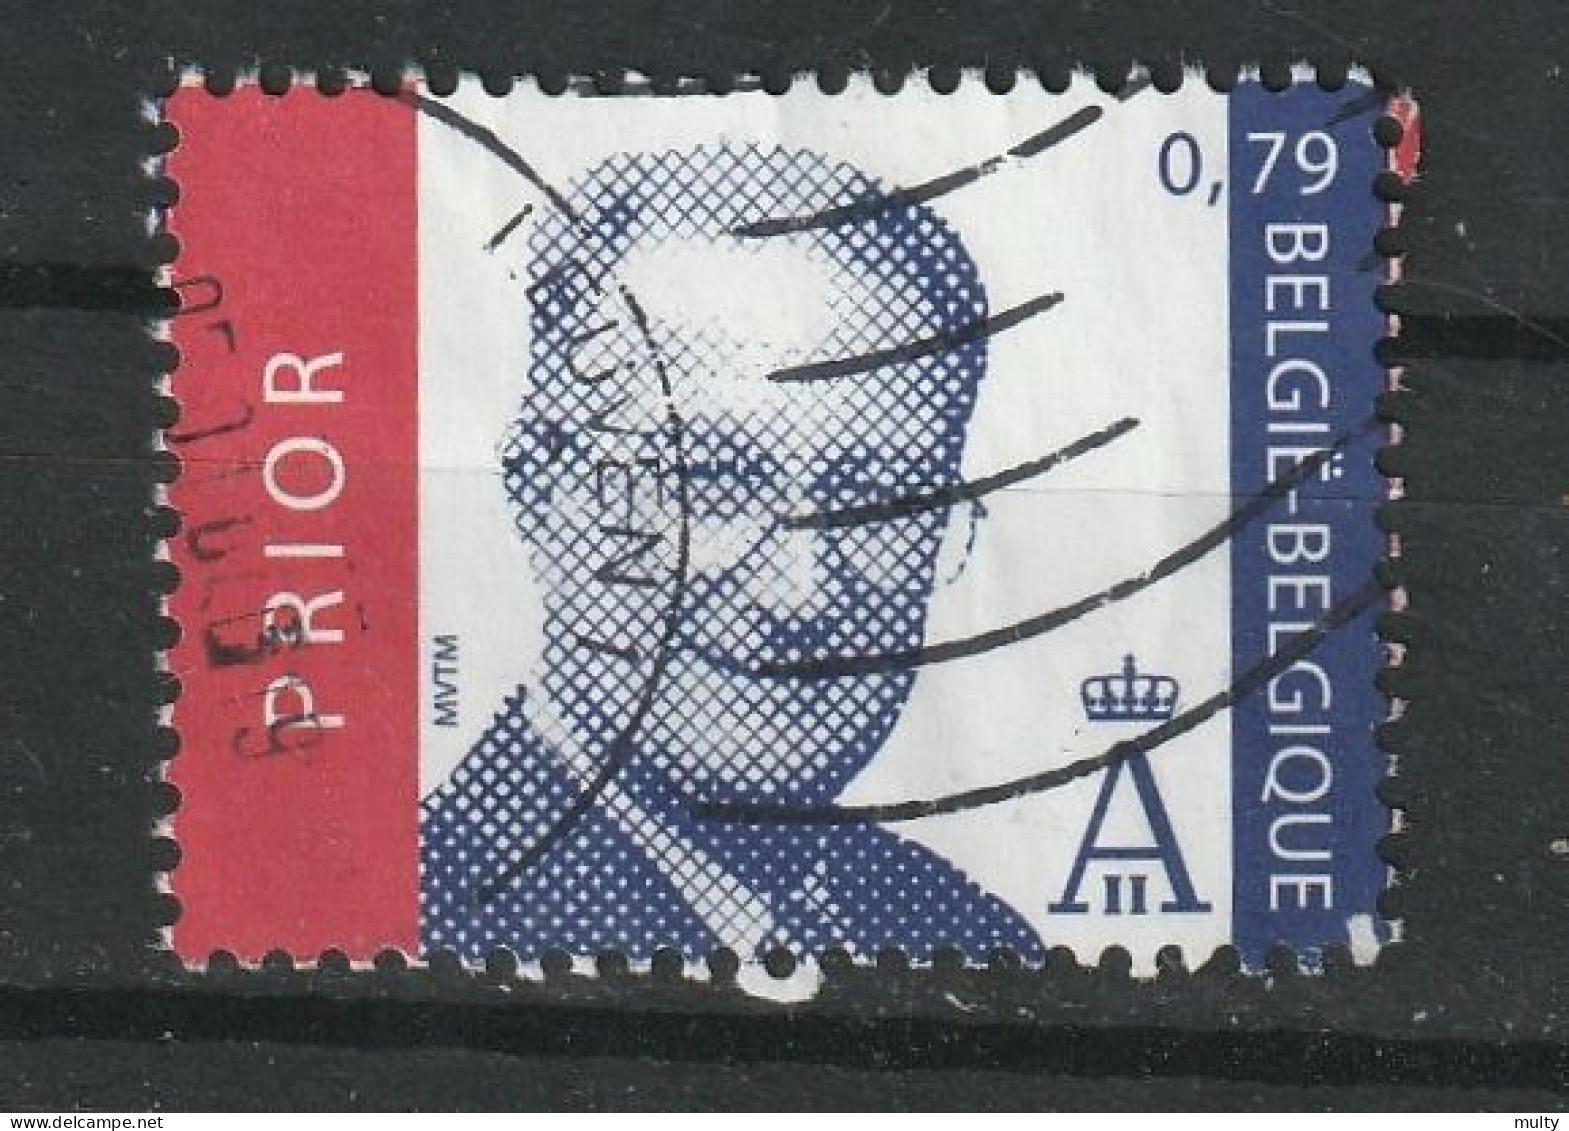 België OCB 3134 (0) - 1993-2013 Roi Albert II (MVTM)